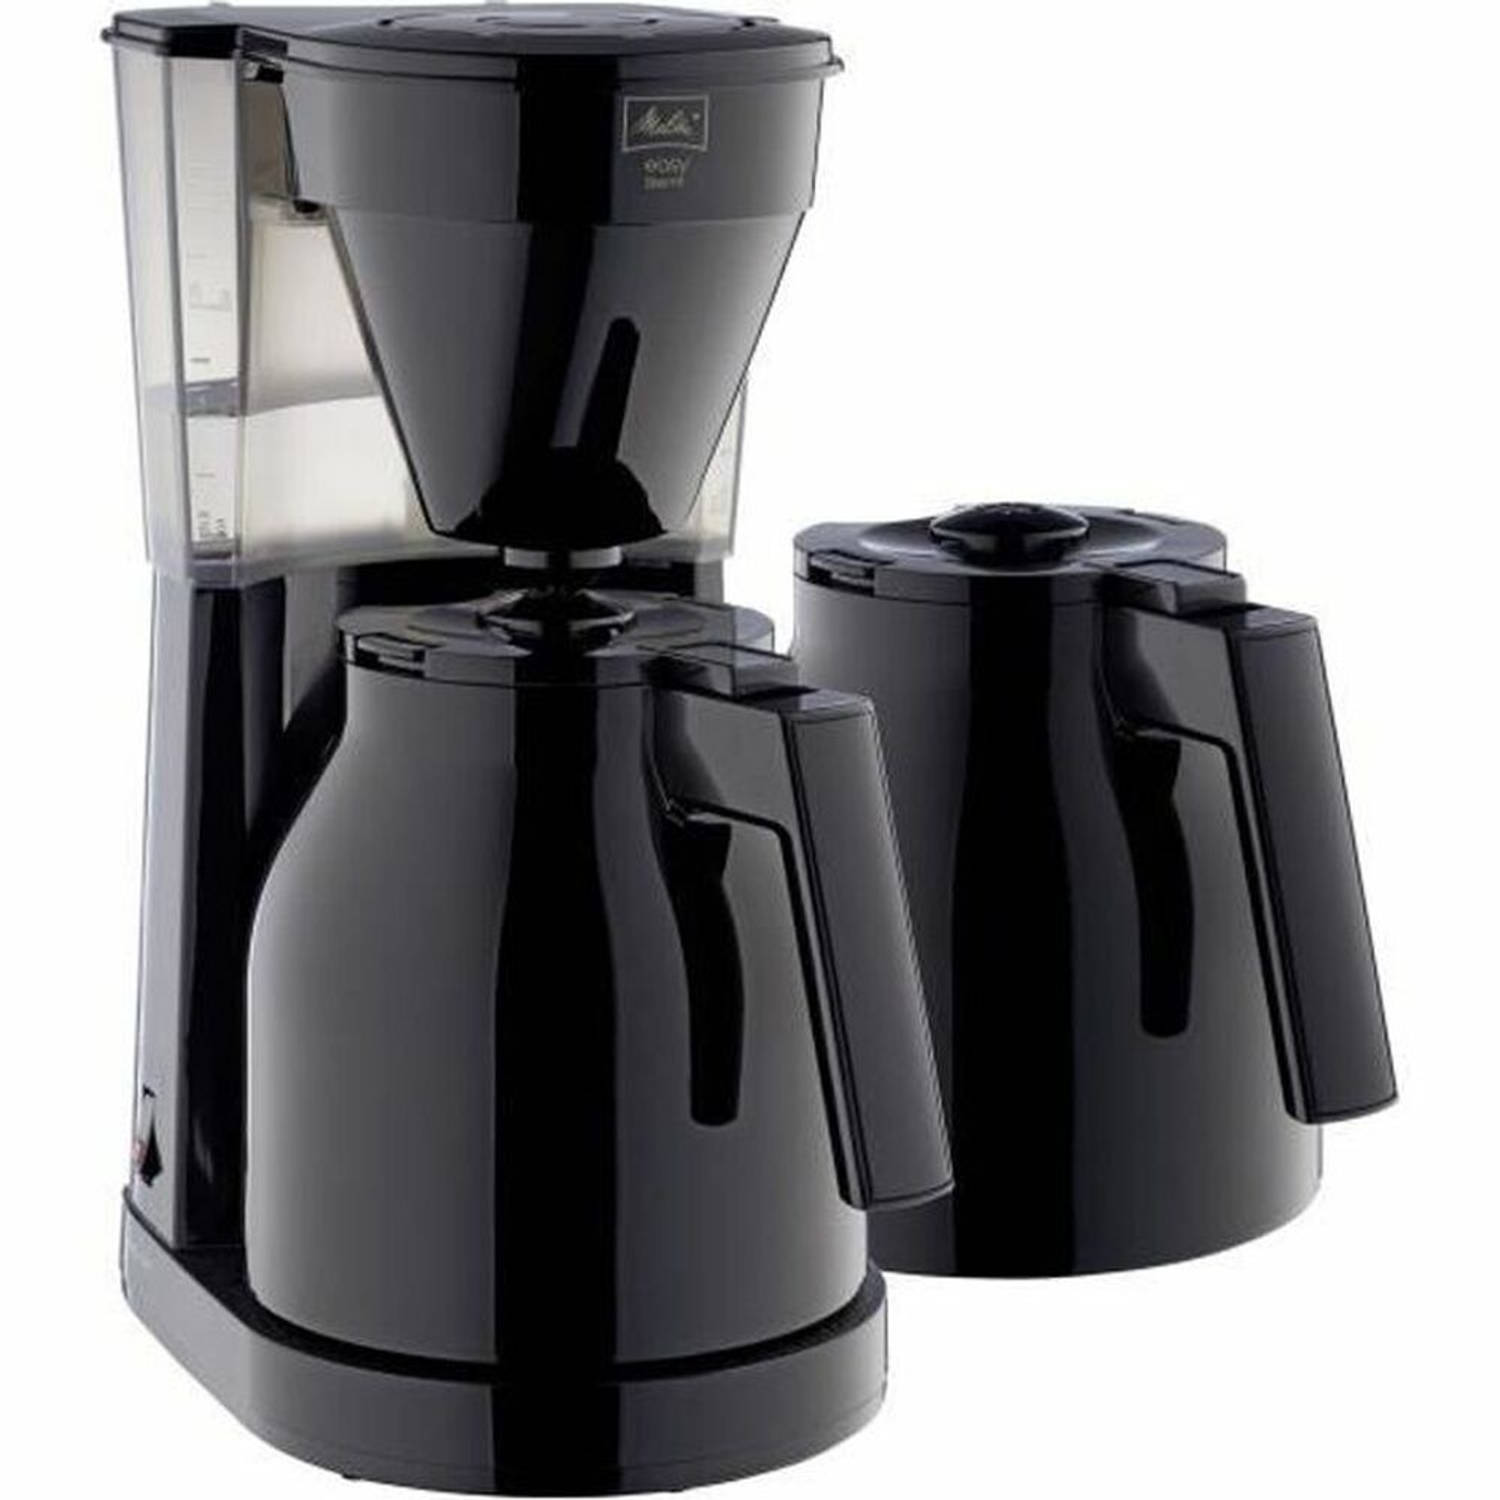 Melitta Easy Therm II - Filter-koffiezetapparaat - Zwart